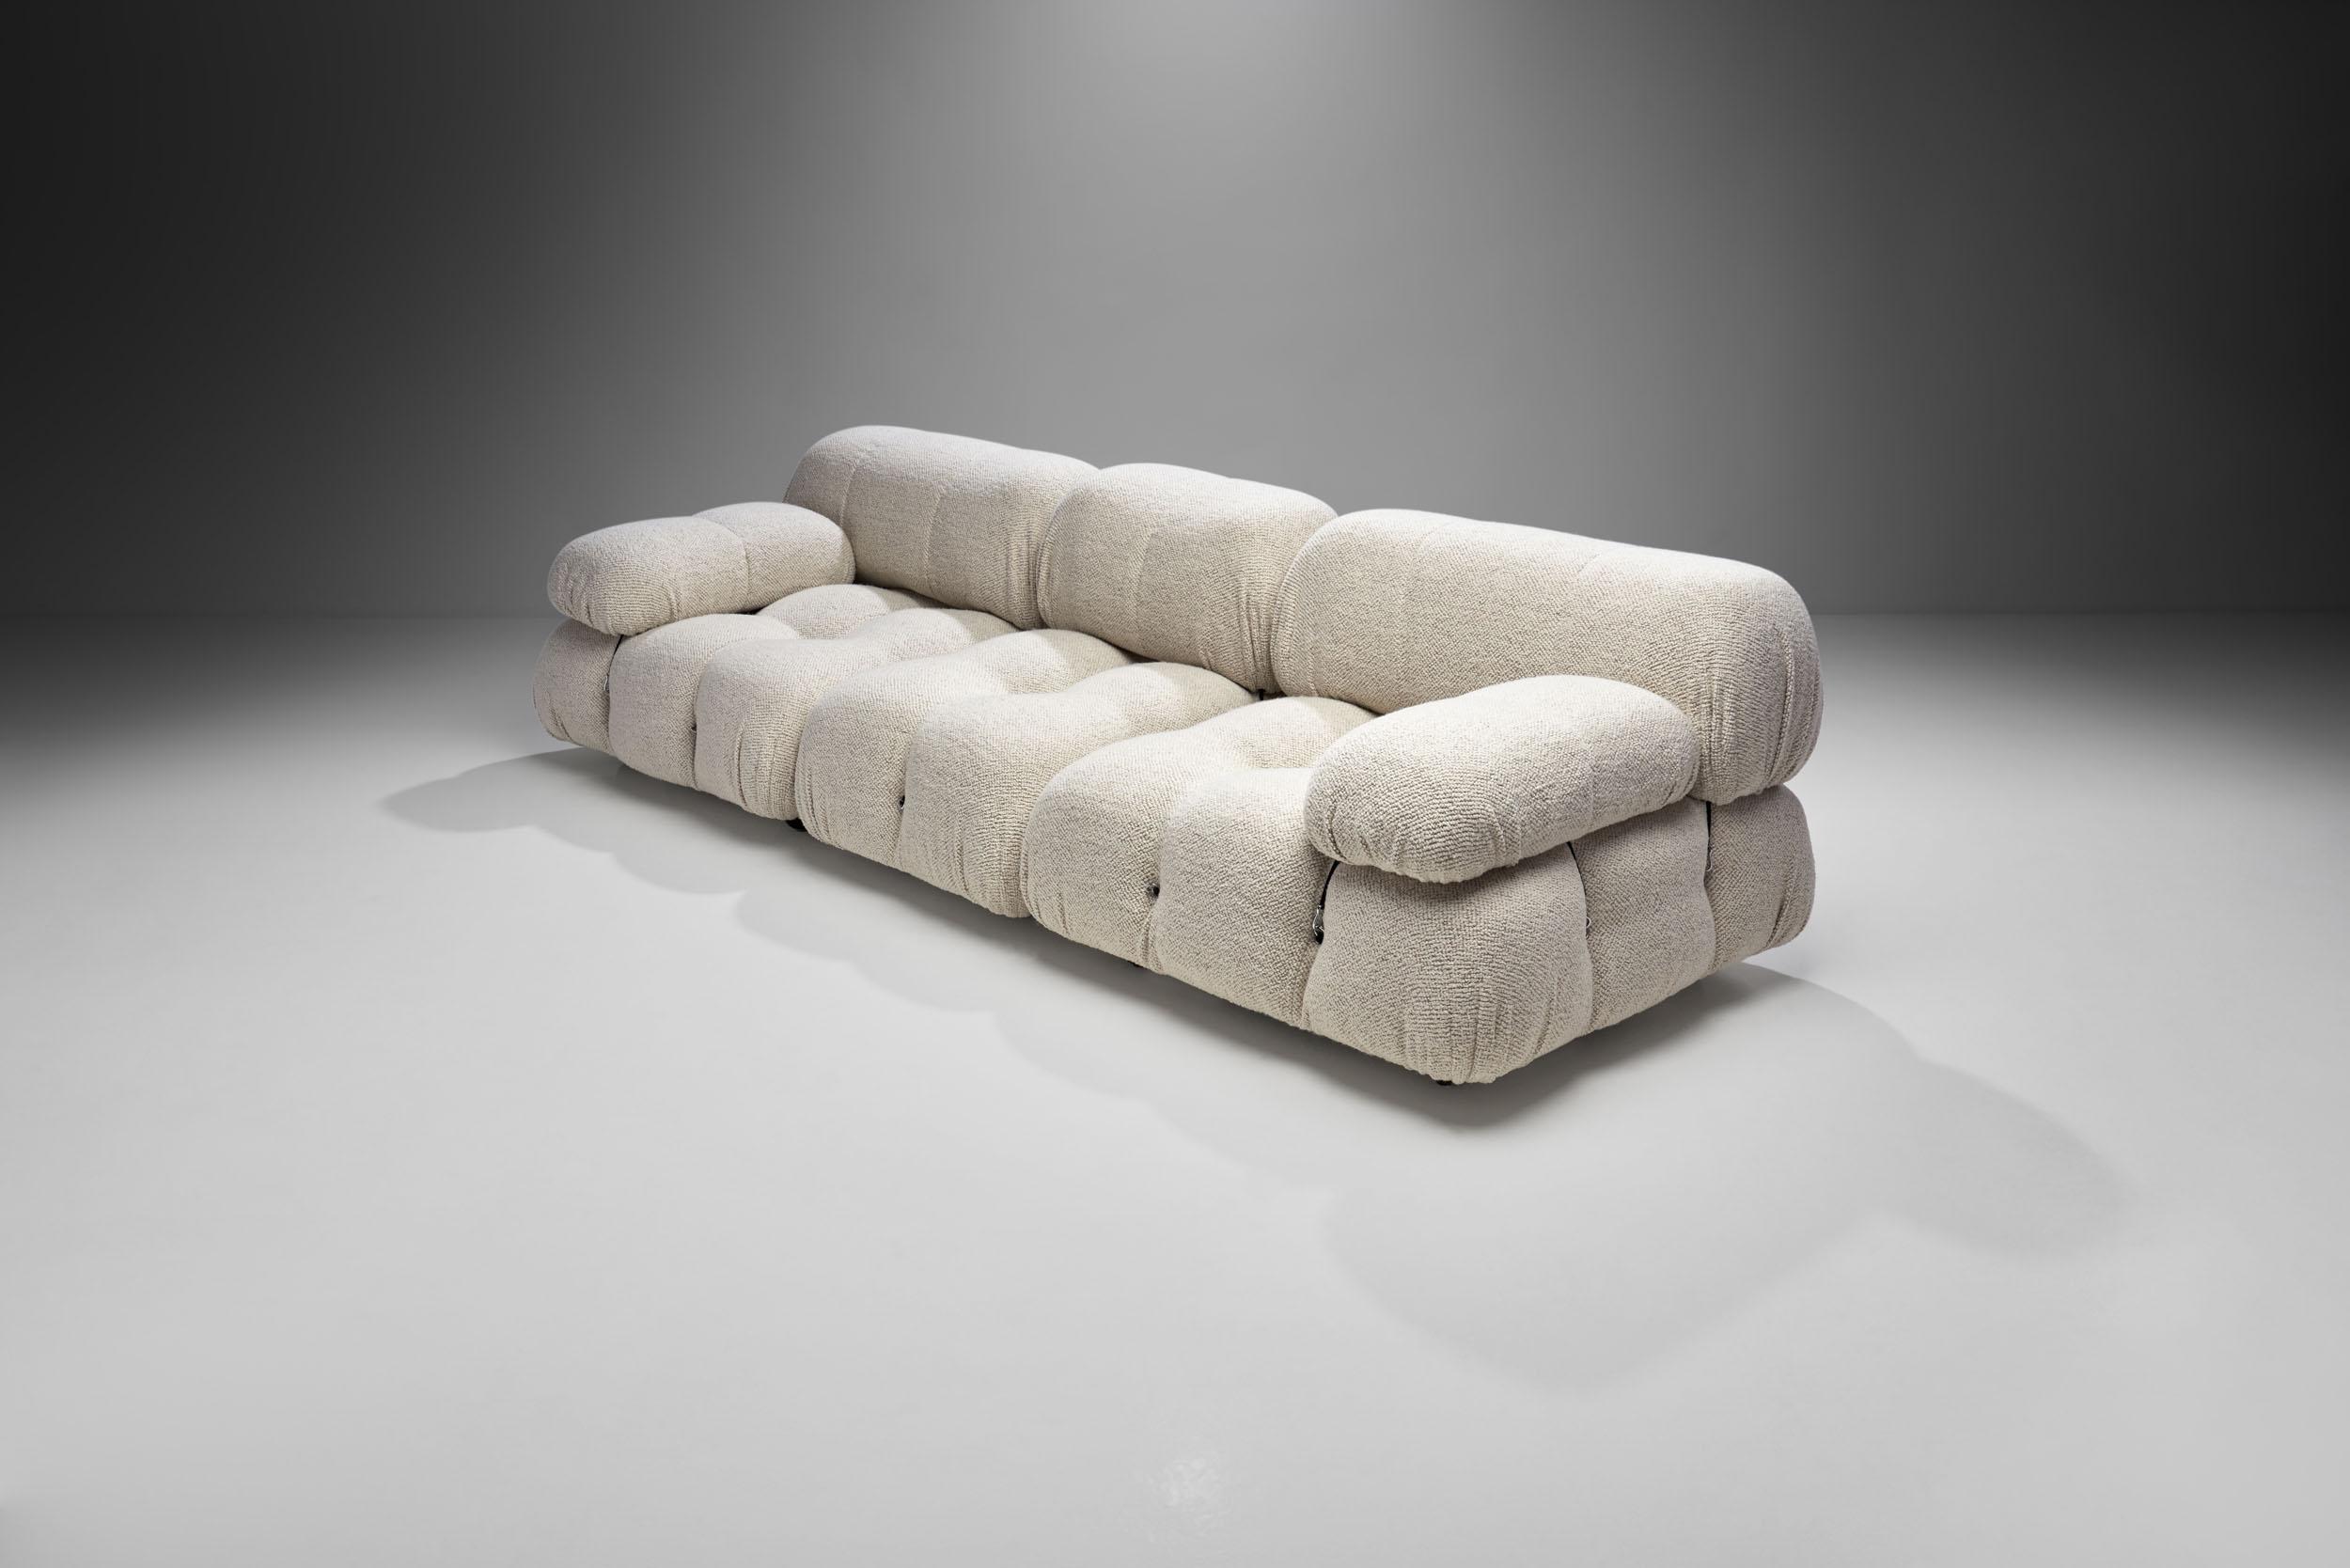 Mid-Century Modern “Camaleonda” Modular Sofa in 3 Segments by Mario Bellini for B&B, Italy 1971 For Sale